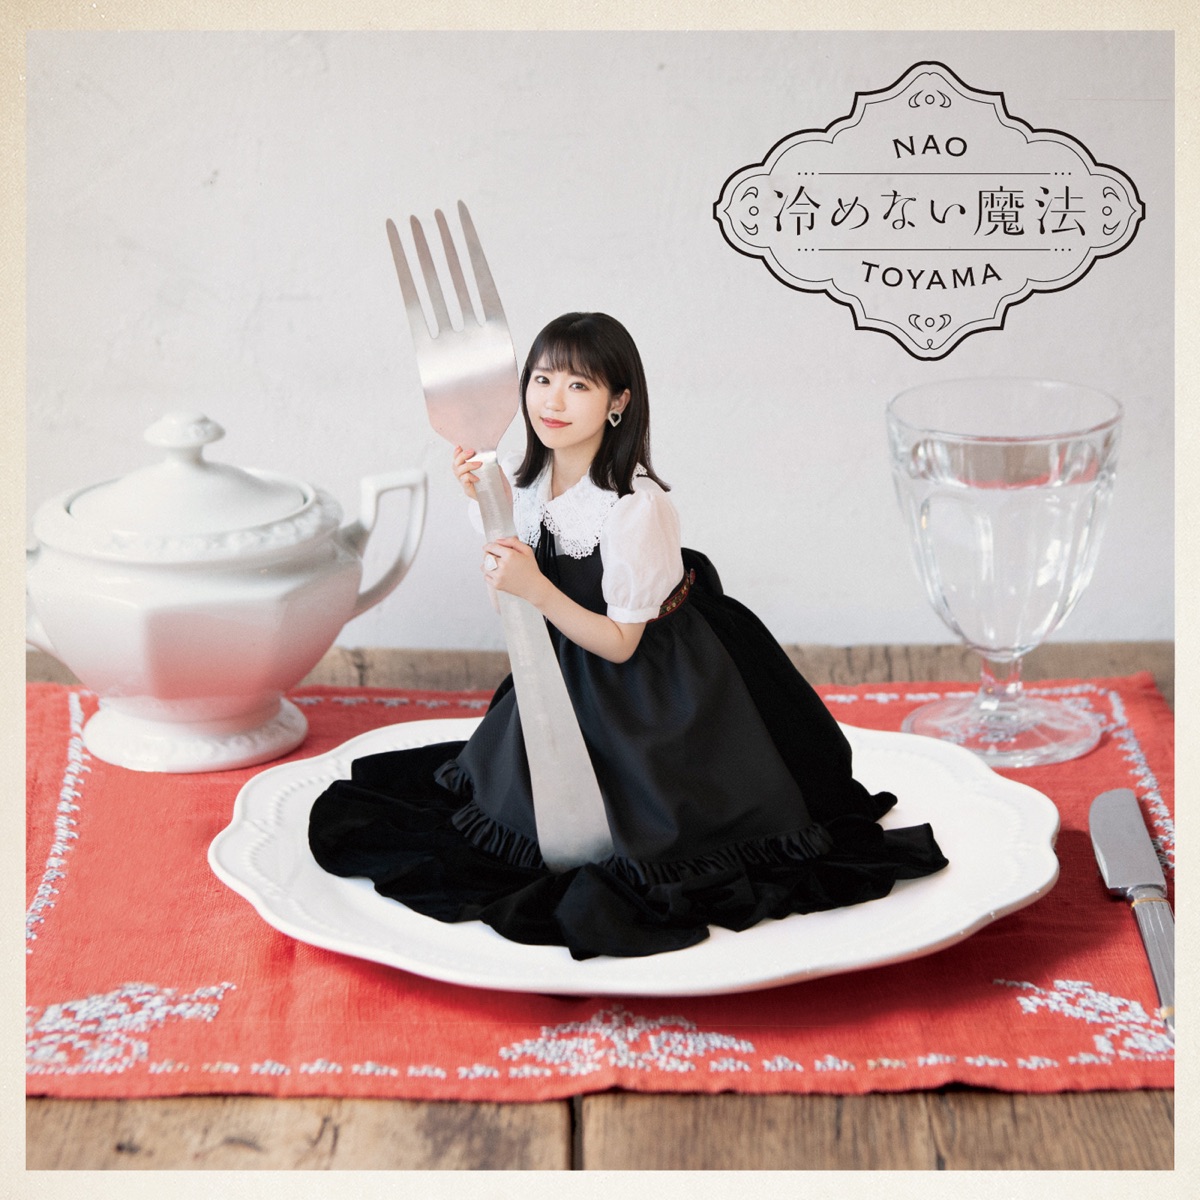 Cover for『Nao Toyama - Samenai Mahou』from the release『Samenai Mahou』